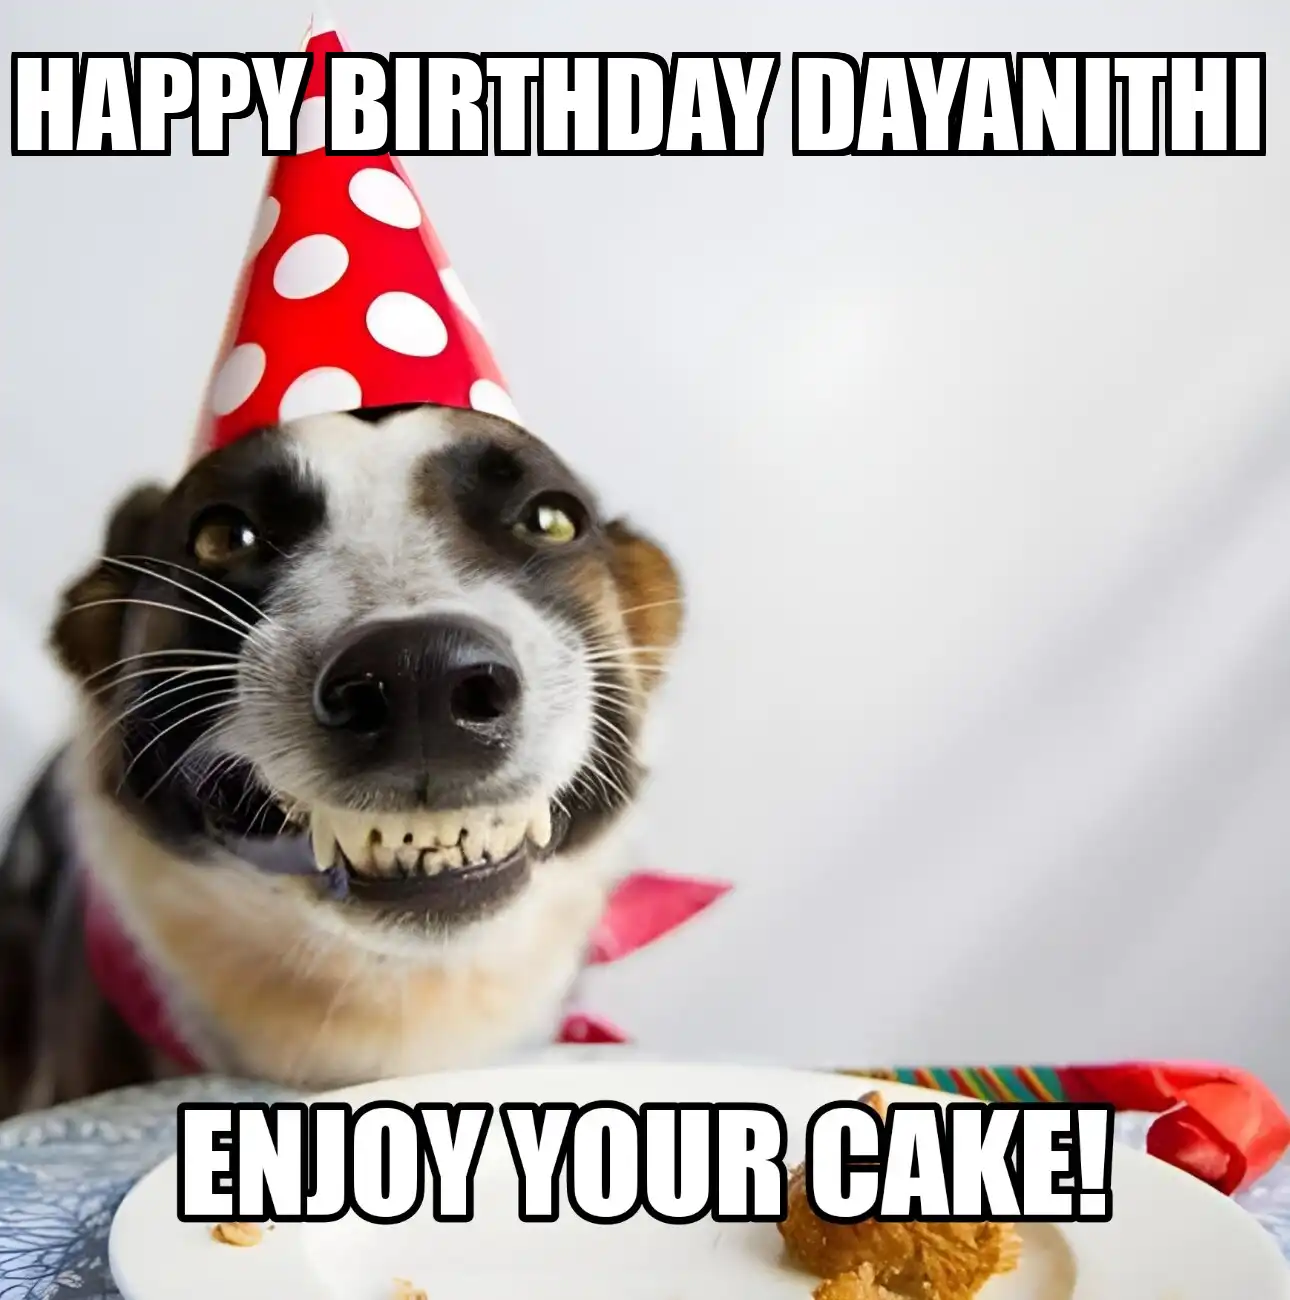 Happy Birthday Dayanithi Enjoy Your Cake Dog Meme